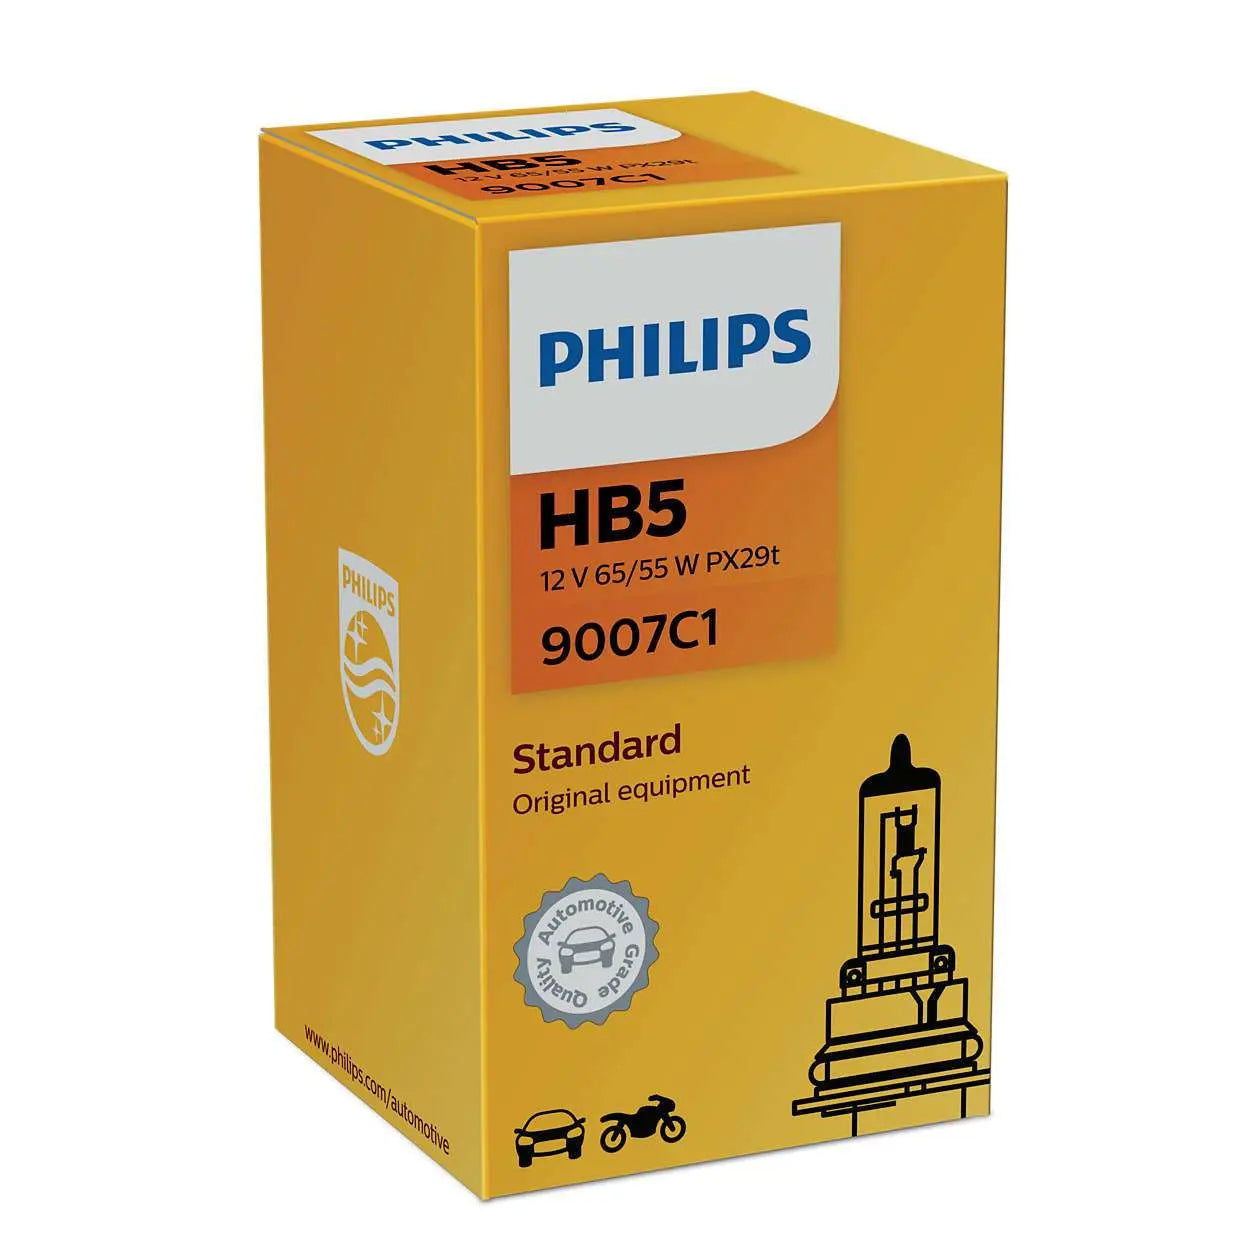 HB5 12V 65/55W PX29t Standard 1 St. Philips - Samsuns Group